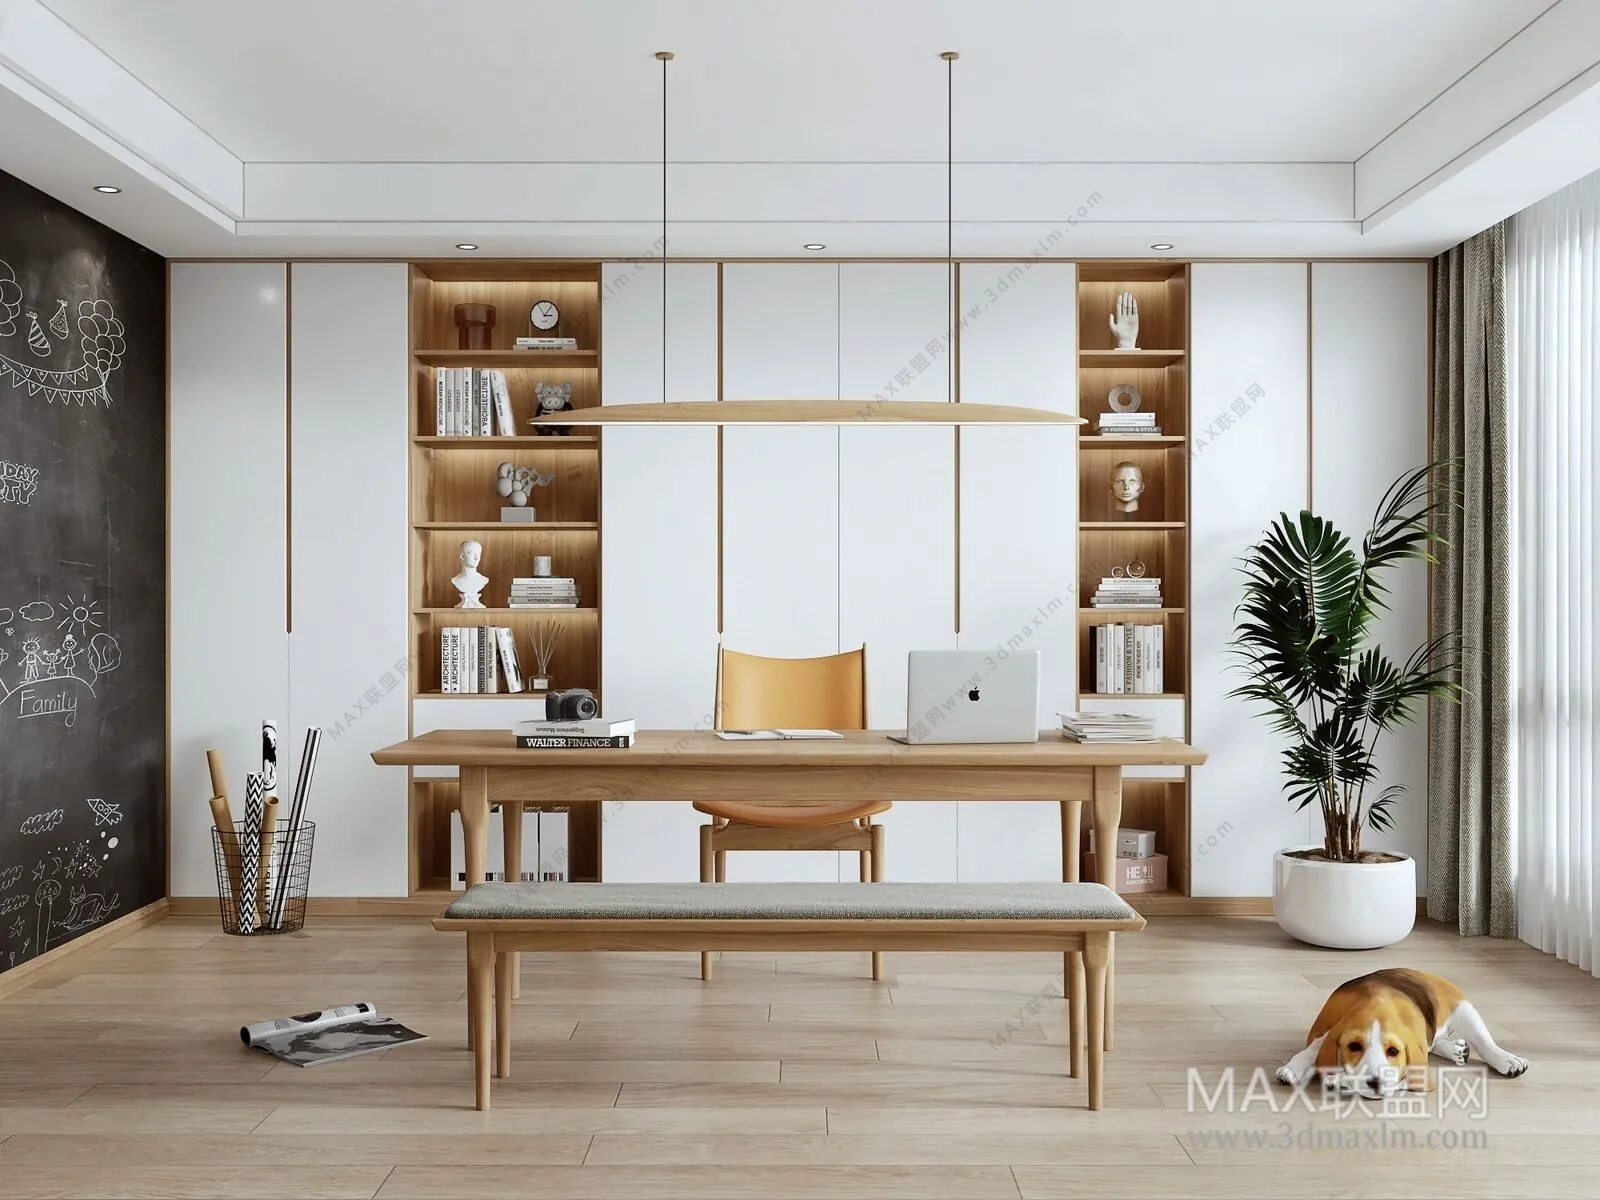 Home Office – Interior Design – Nordic Design – 002